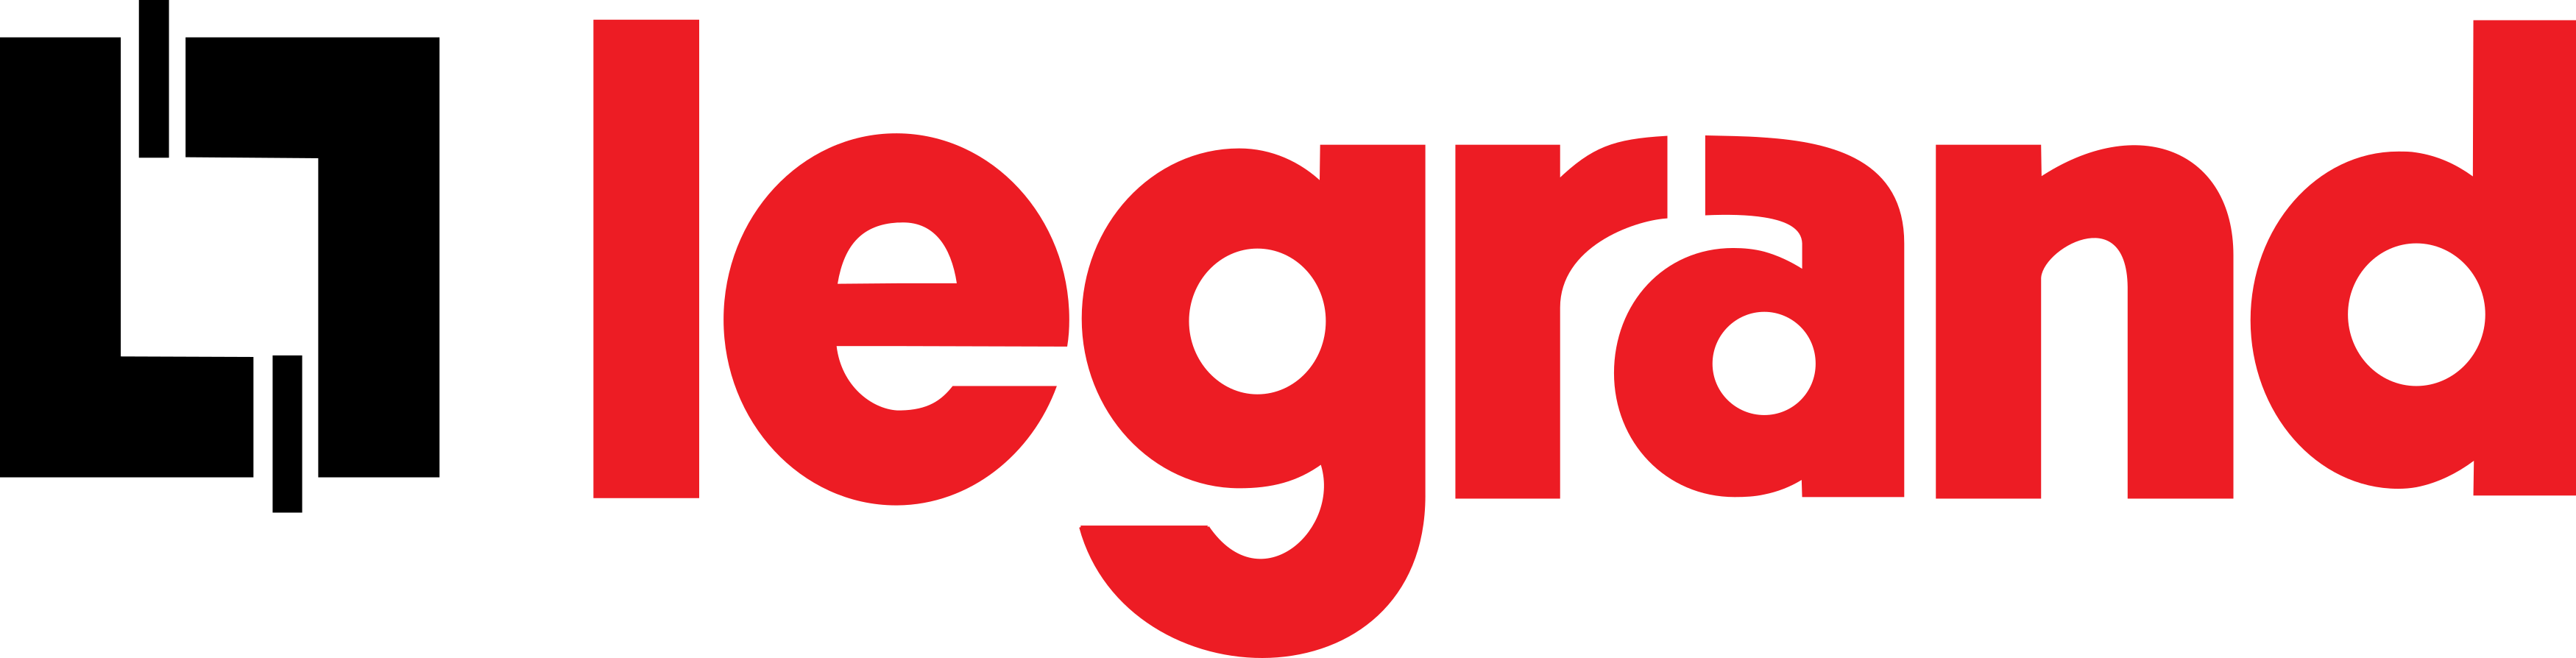 Logo LEGRAND